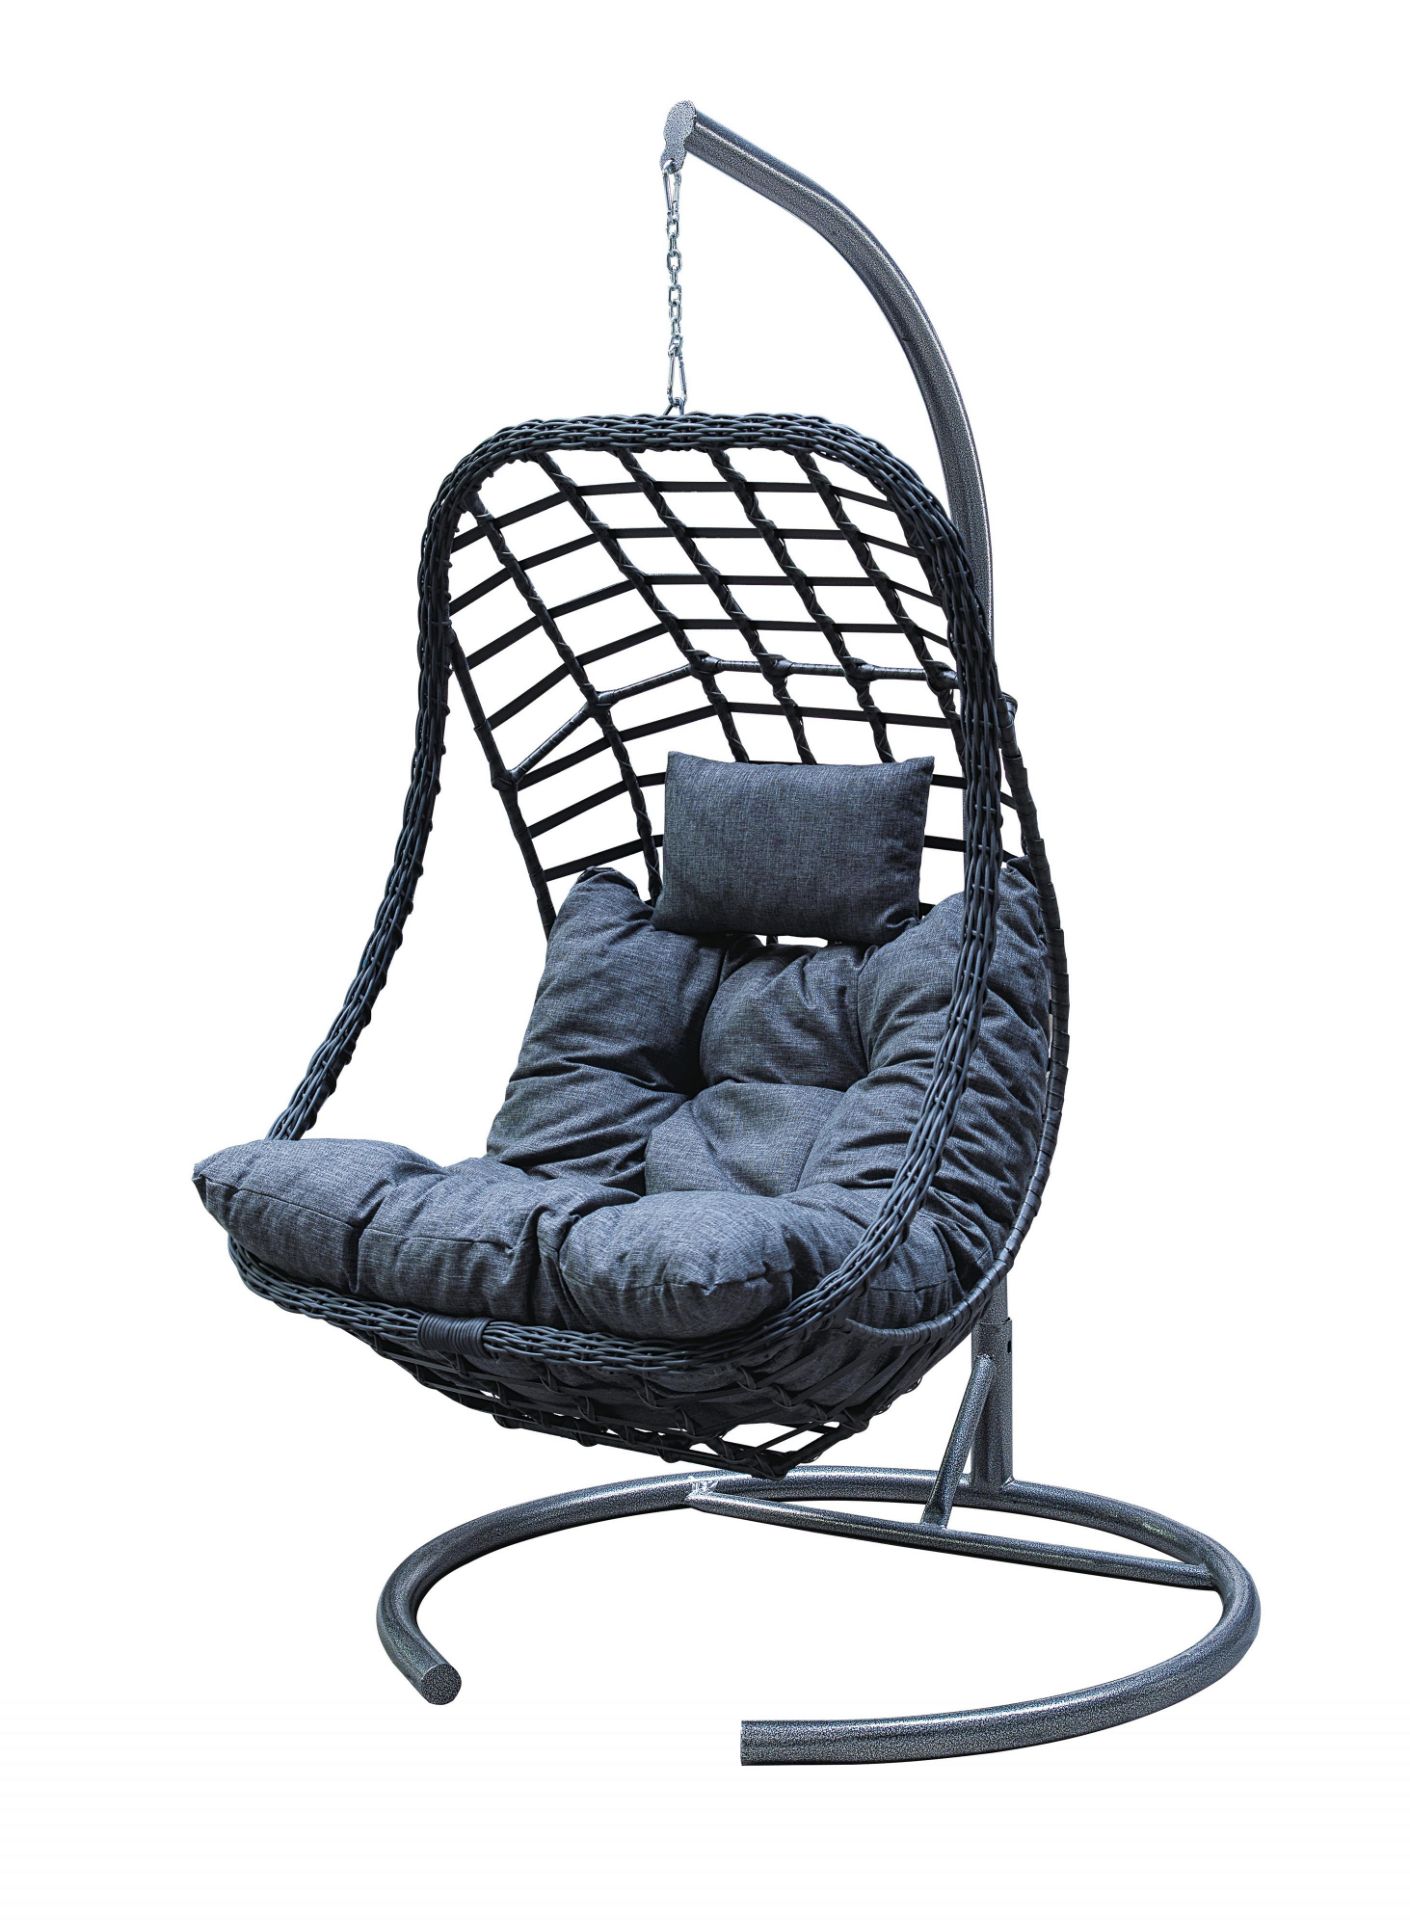 + VAT Brand New SRP £299.99 The Chelsea Garden Co "St Tropez" Luxury Rattan Grey Large Swing Chair -